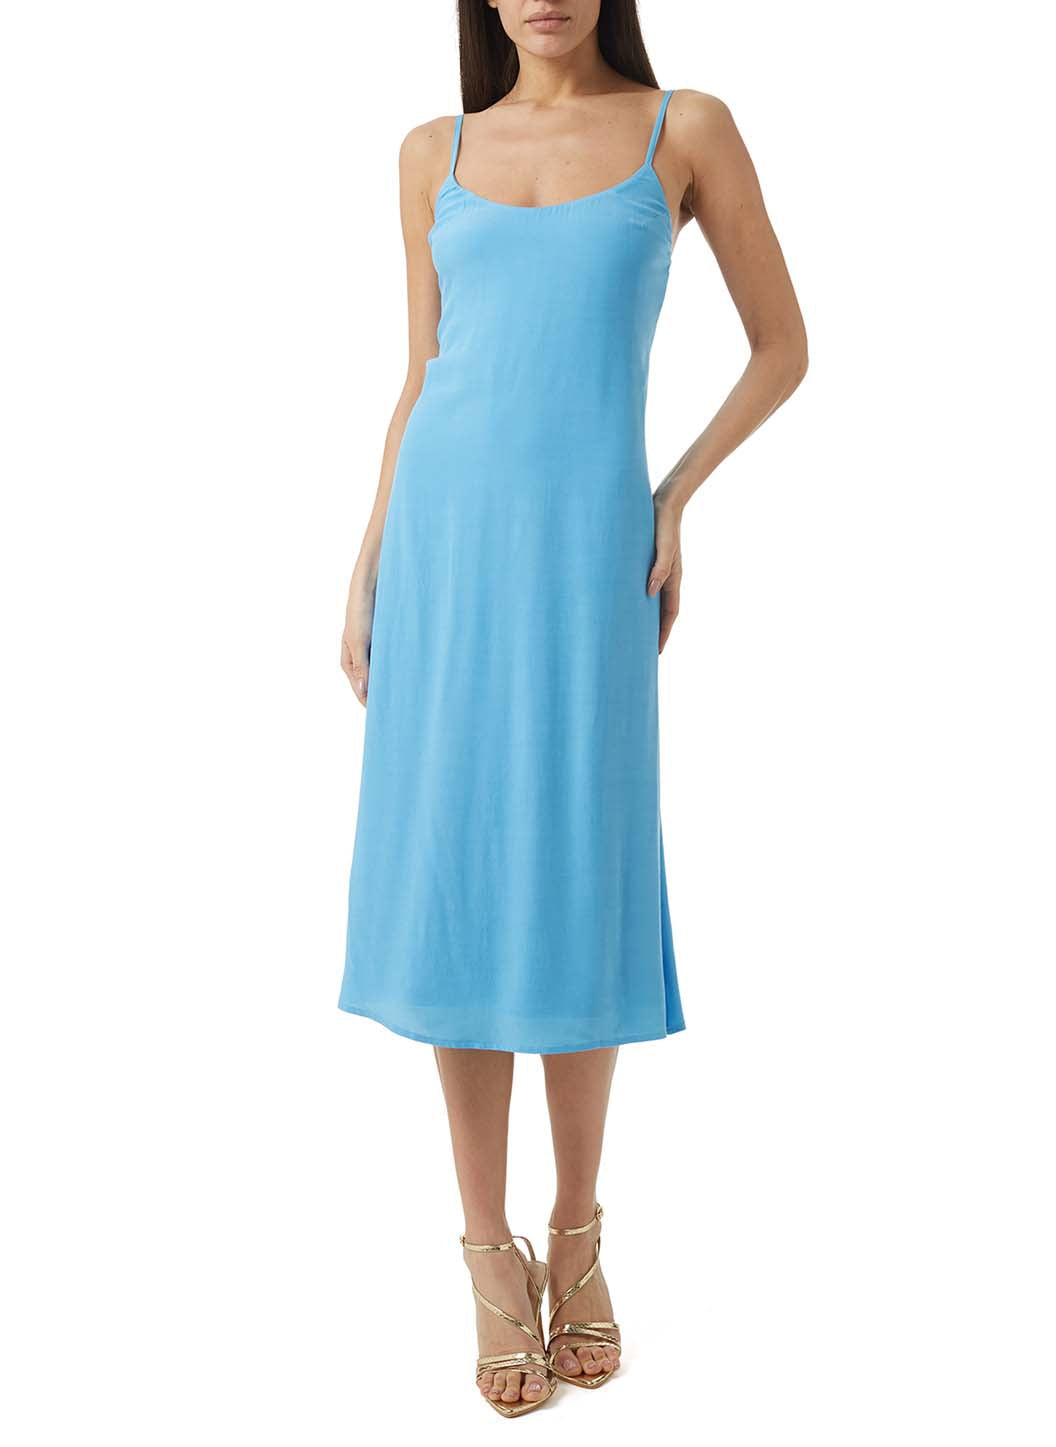 Primrose Blue Crepe Dress